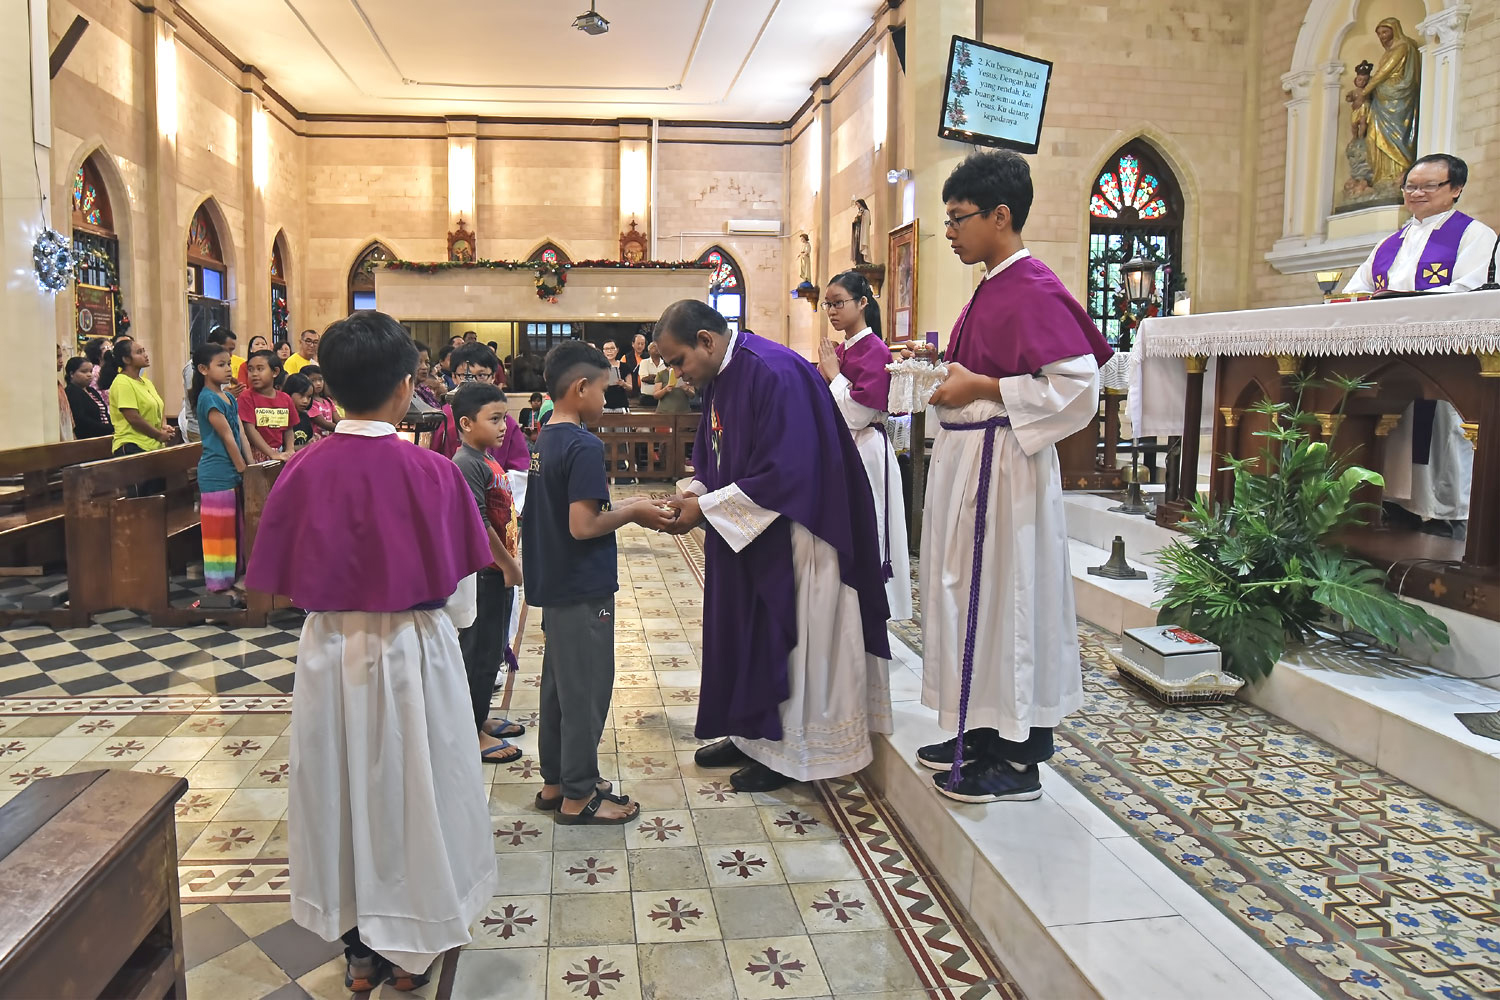 Orang asli children presenting offering during mass in BM